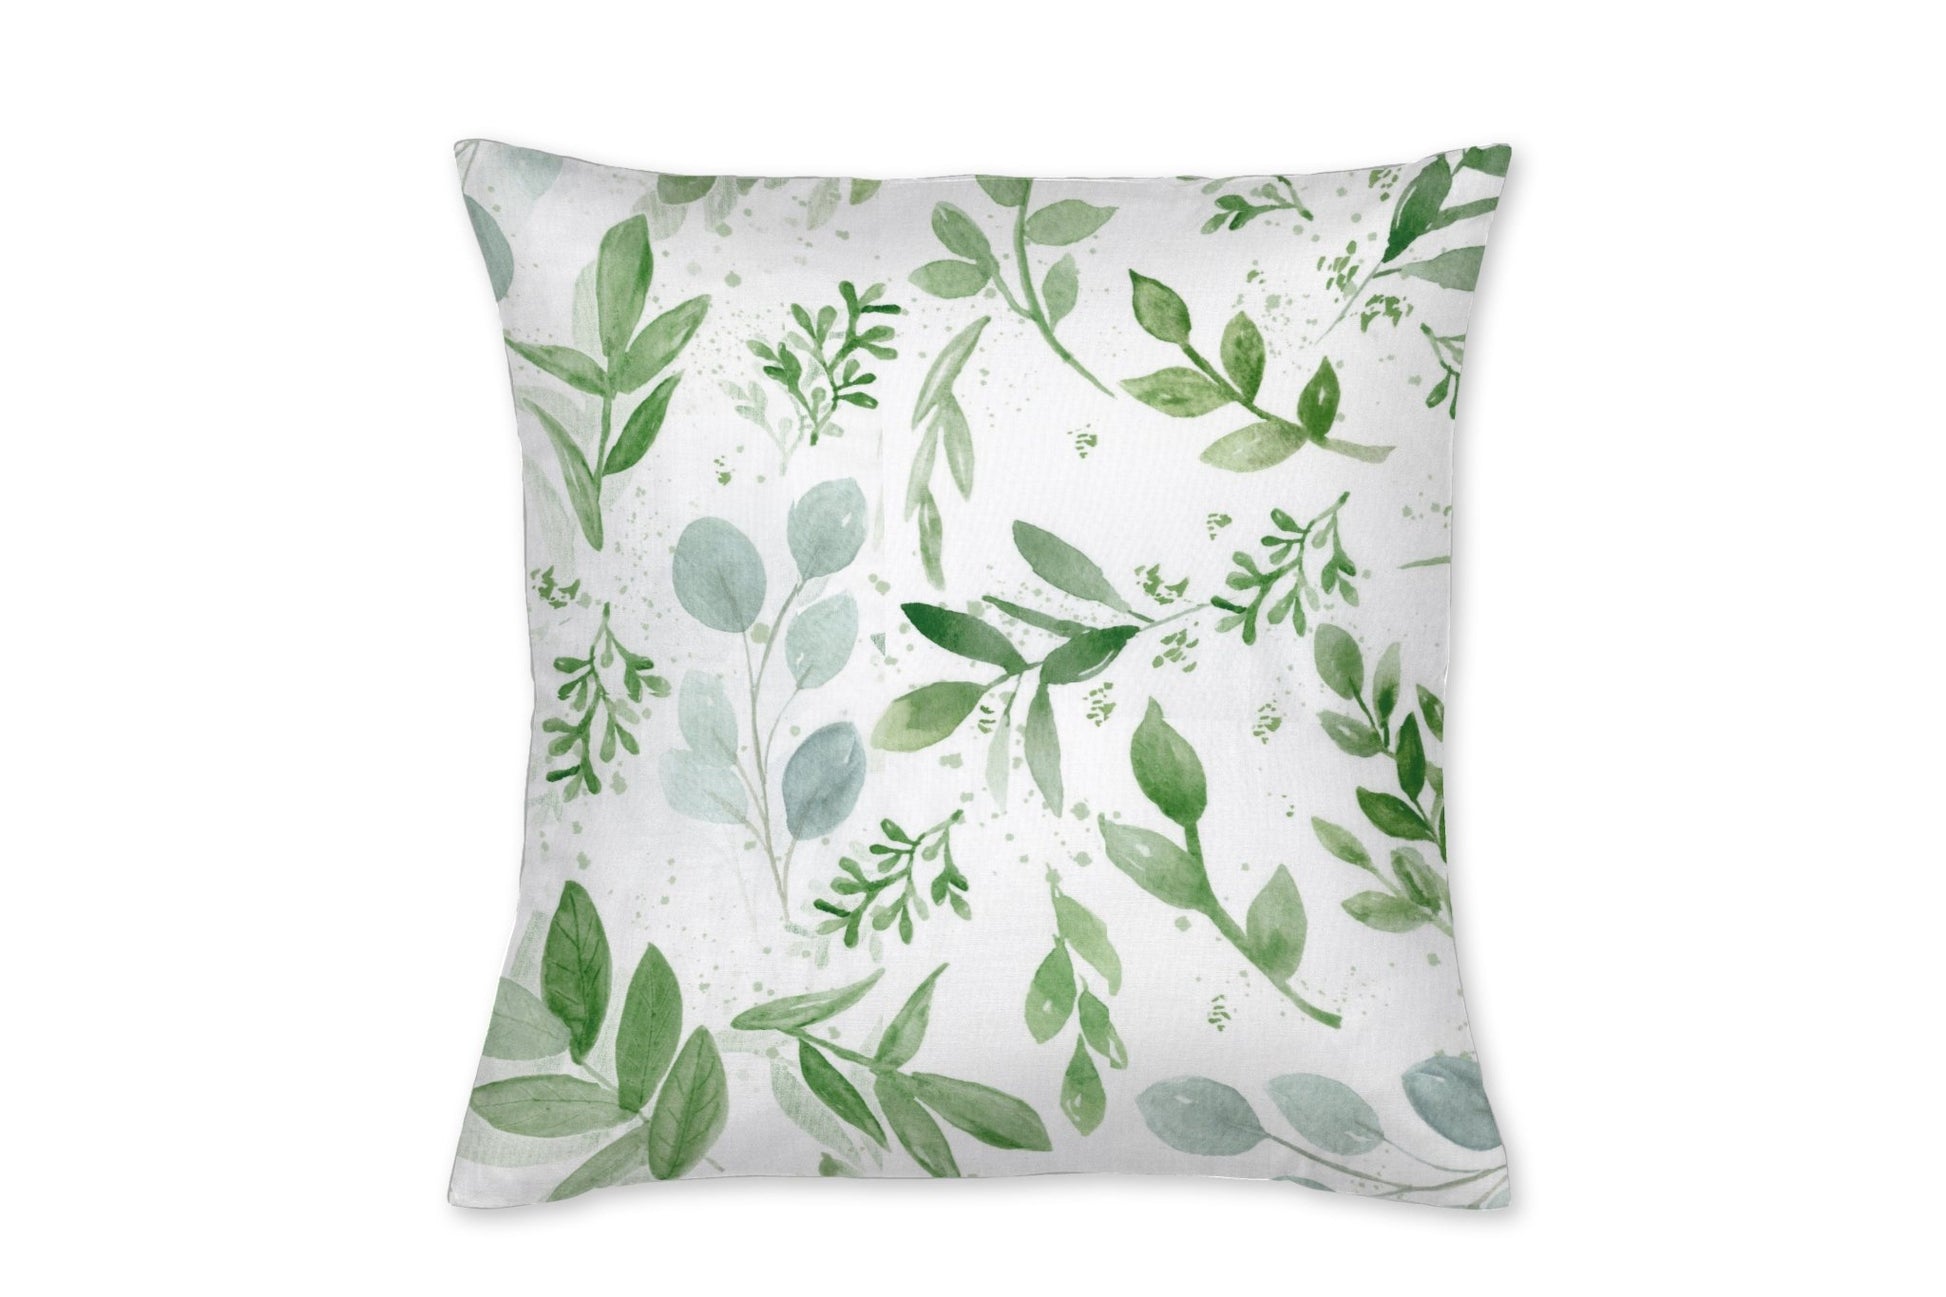 White and Green Farmhouse Throw Pillow - New Arrivals Inc